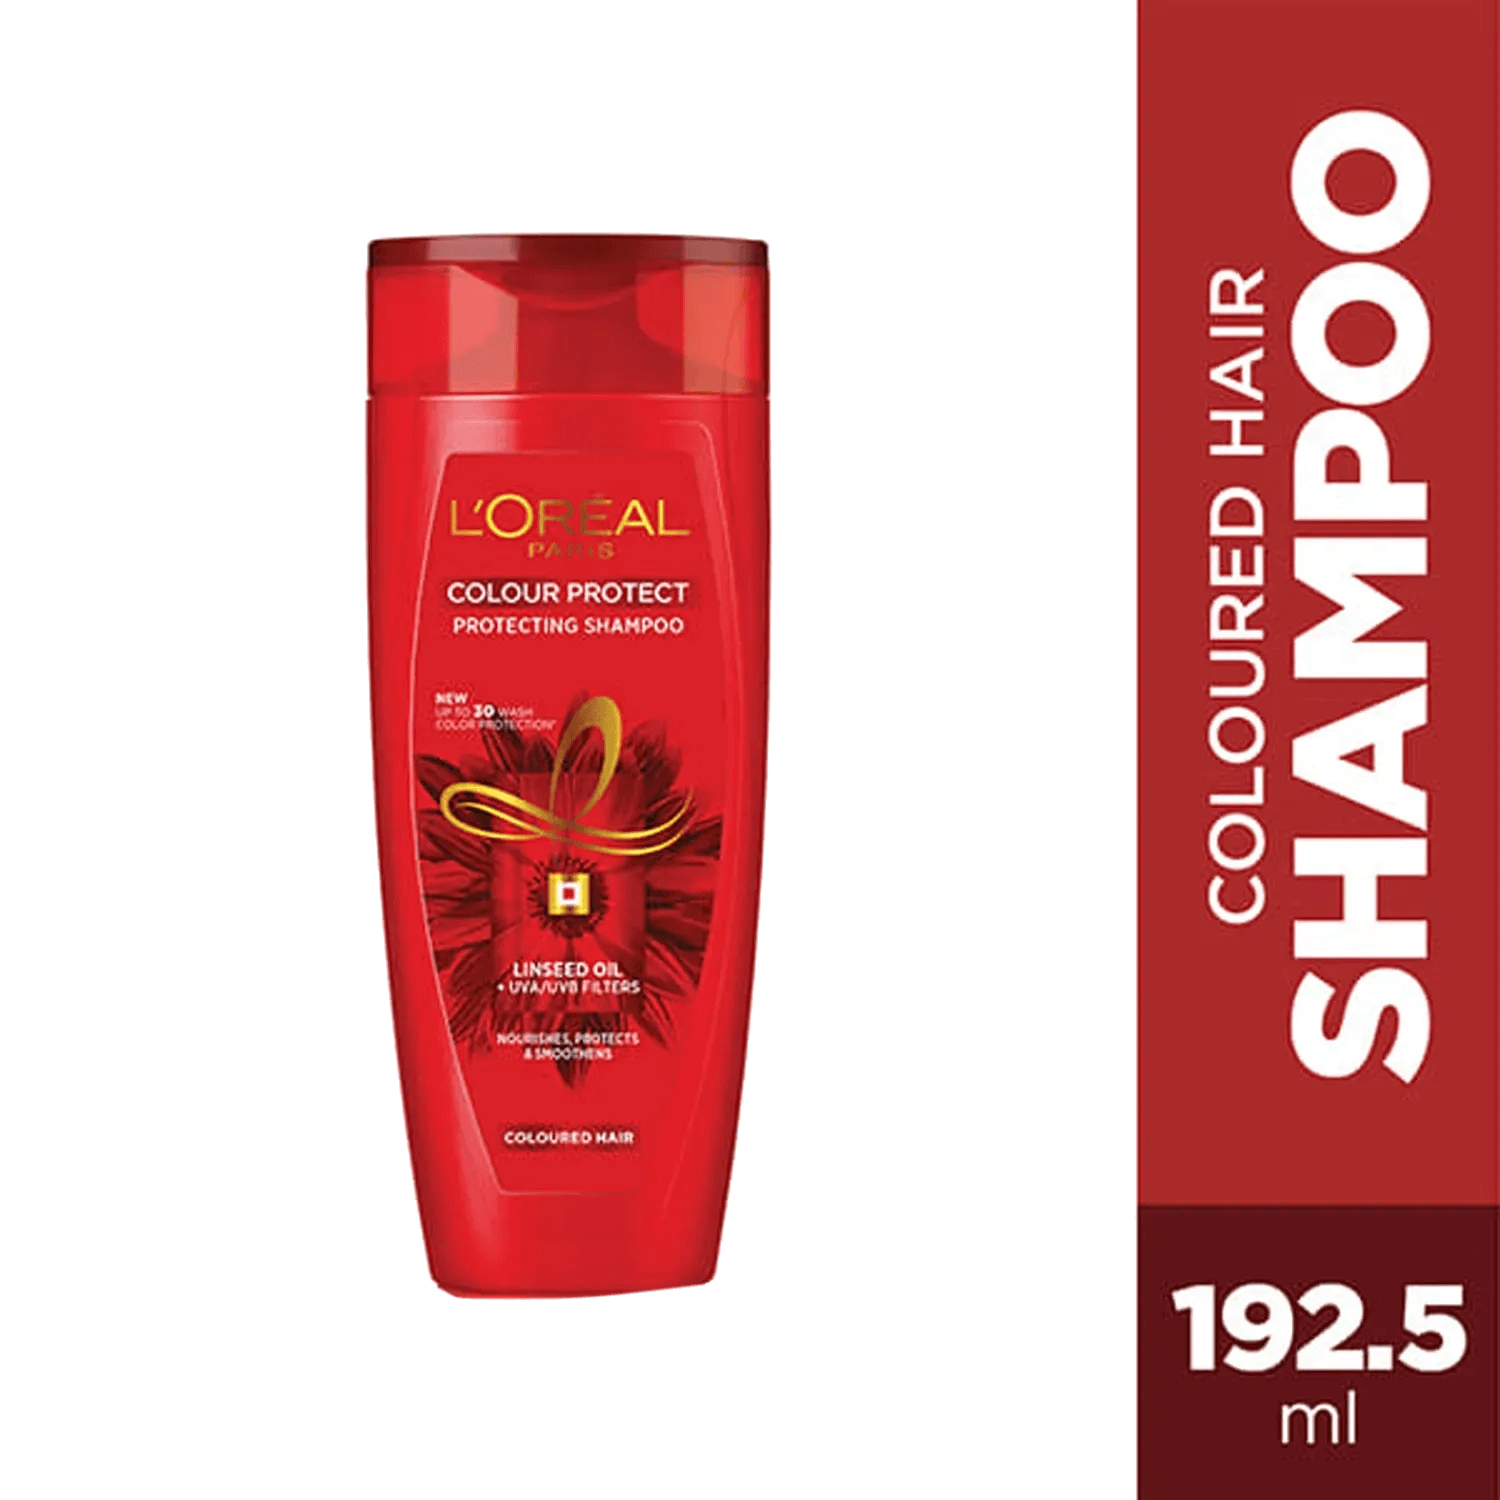 L'Oreal Paris | L'Oreal Paris Color Protect Shampoo (192.5ml)